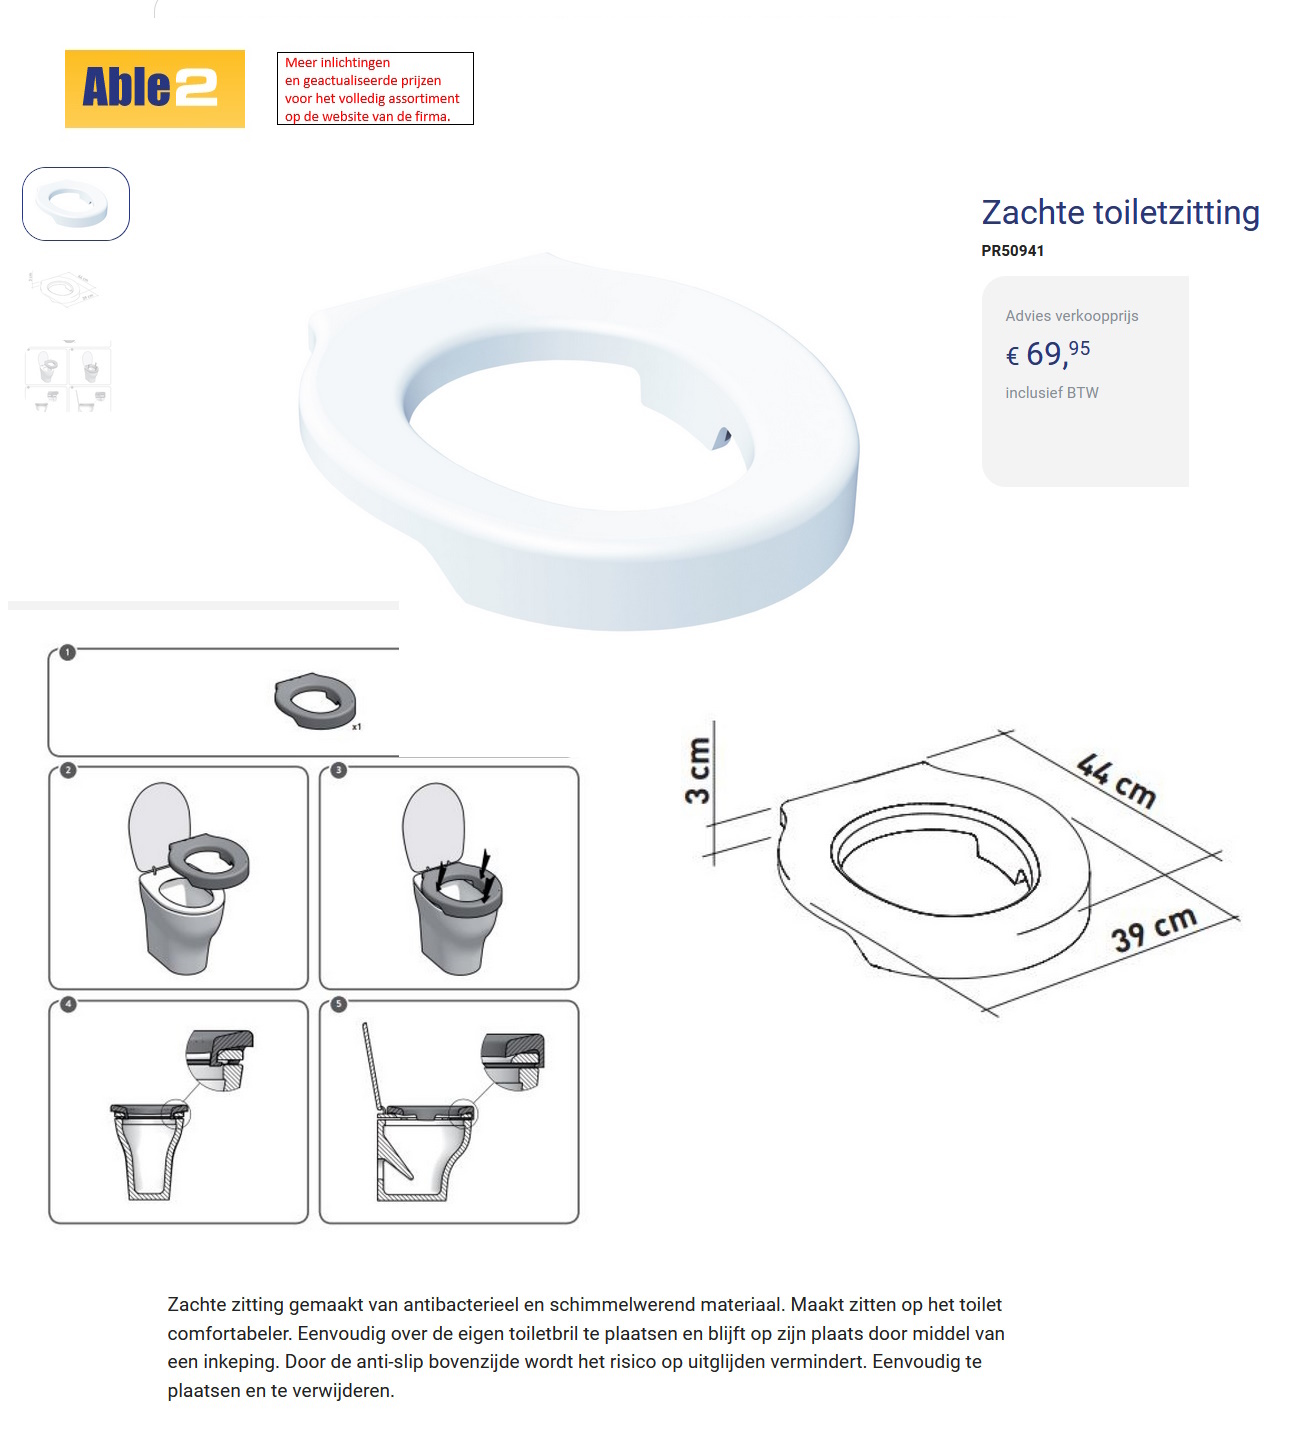 toegevoegd document 4 van Zachte toiletzitting 2 modellen PR50648 / PR50941 